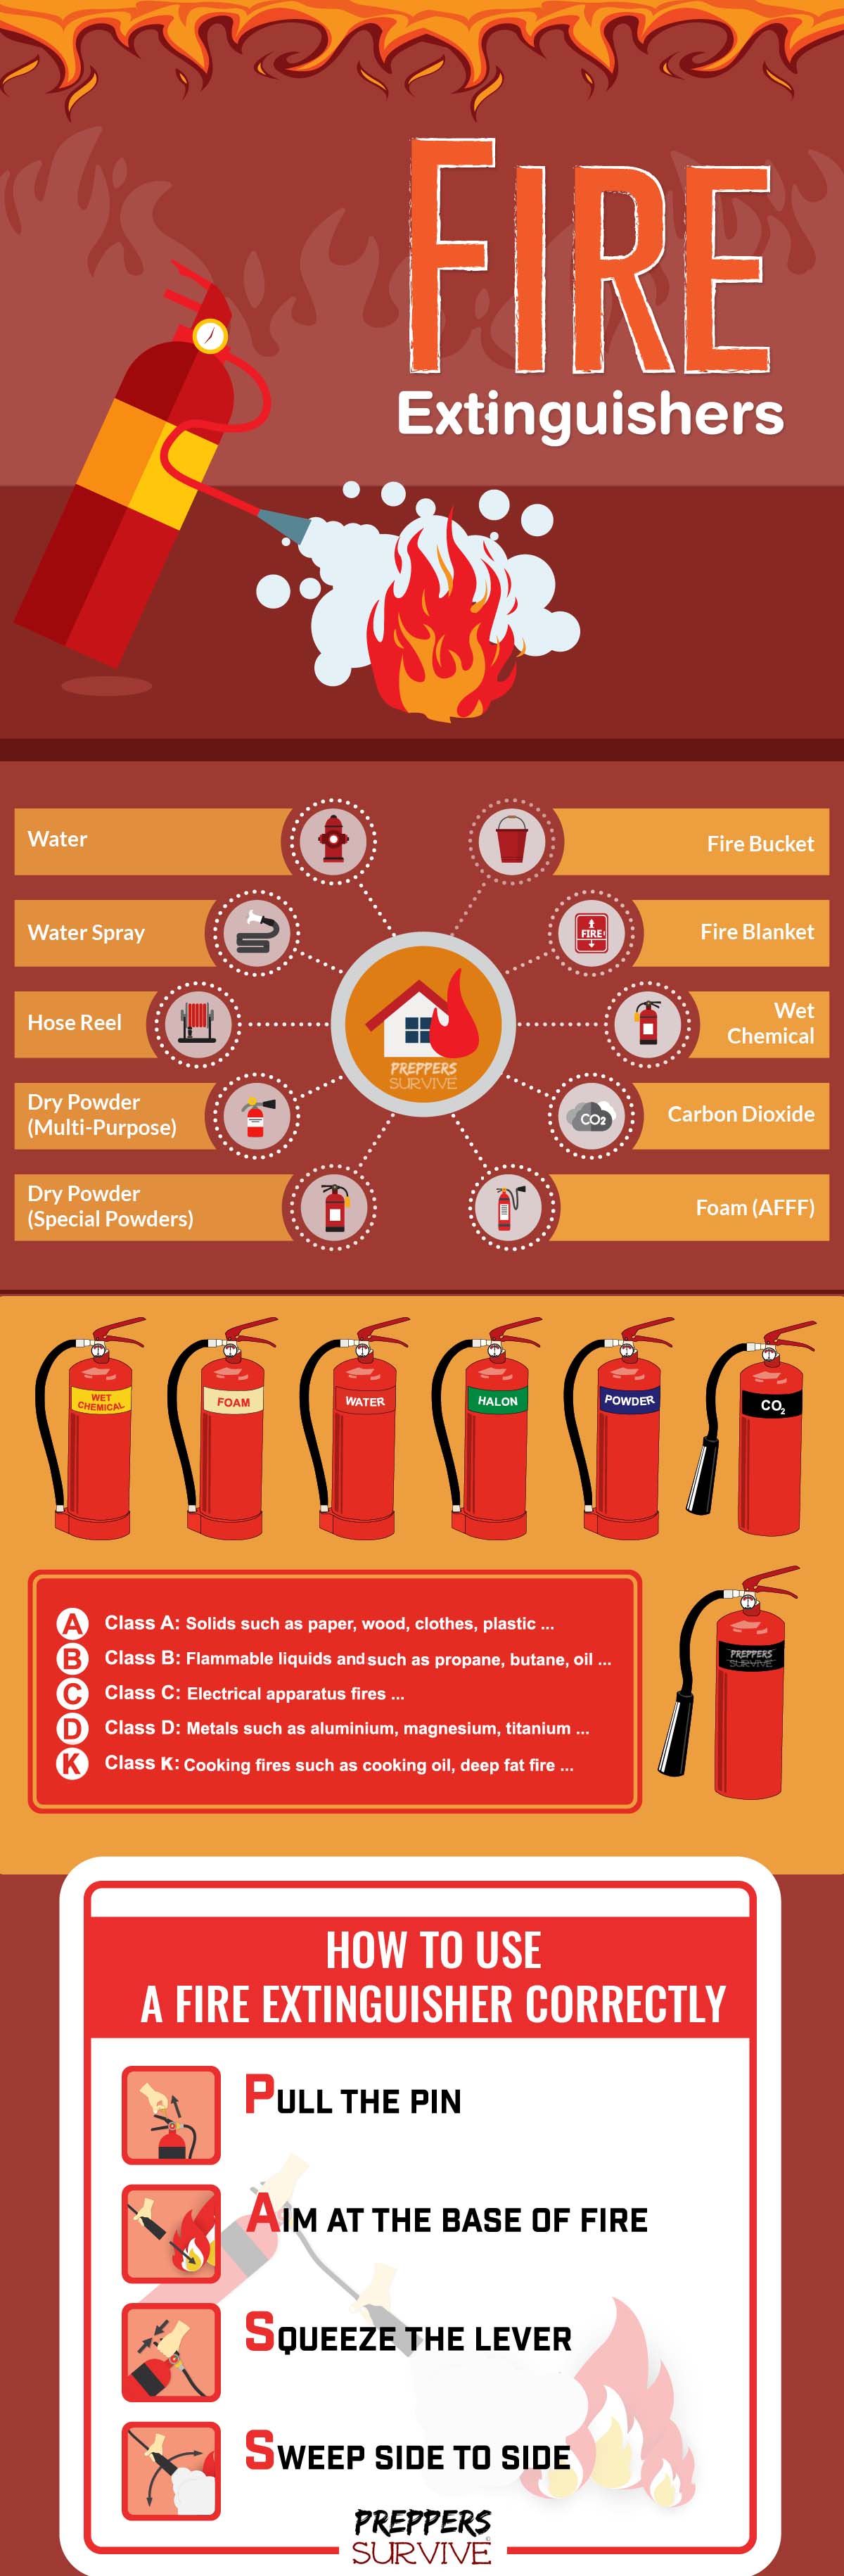 Quick Fire Extinguisher Quiz - Fire Extinguishers 101 